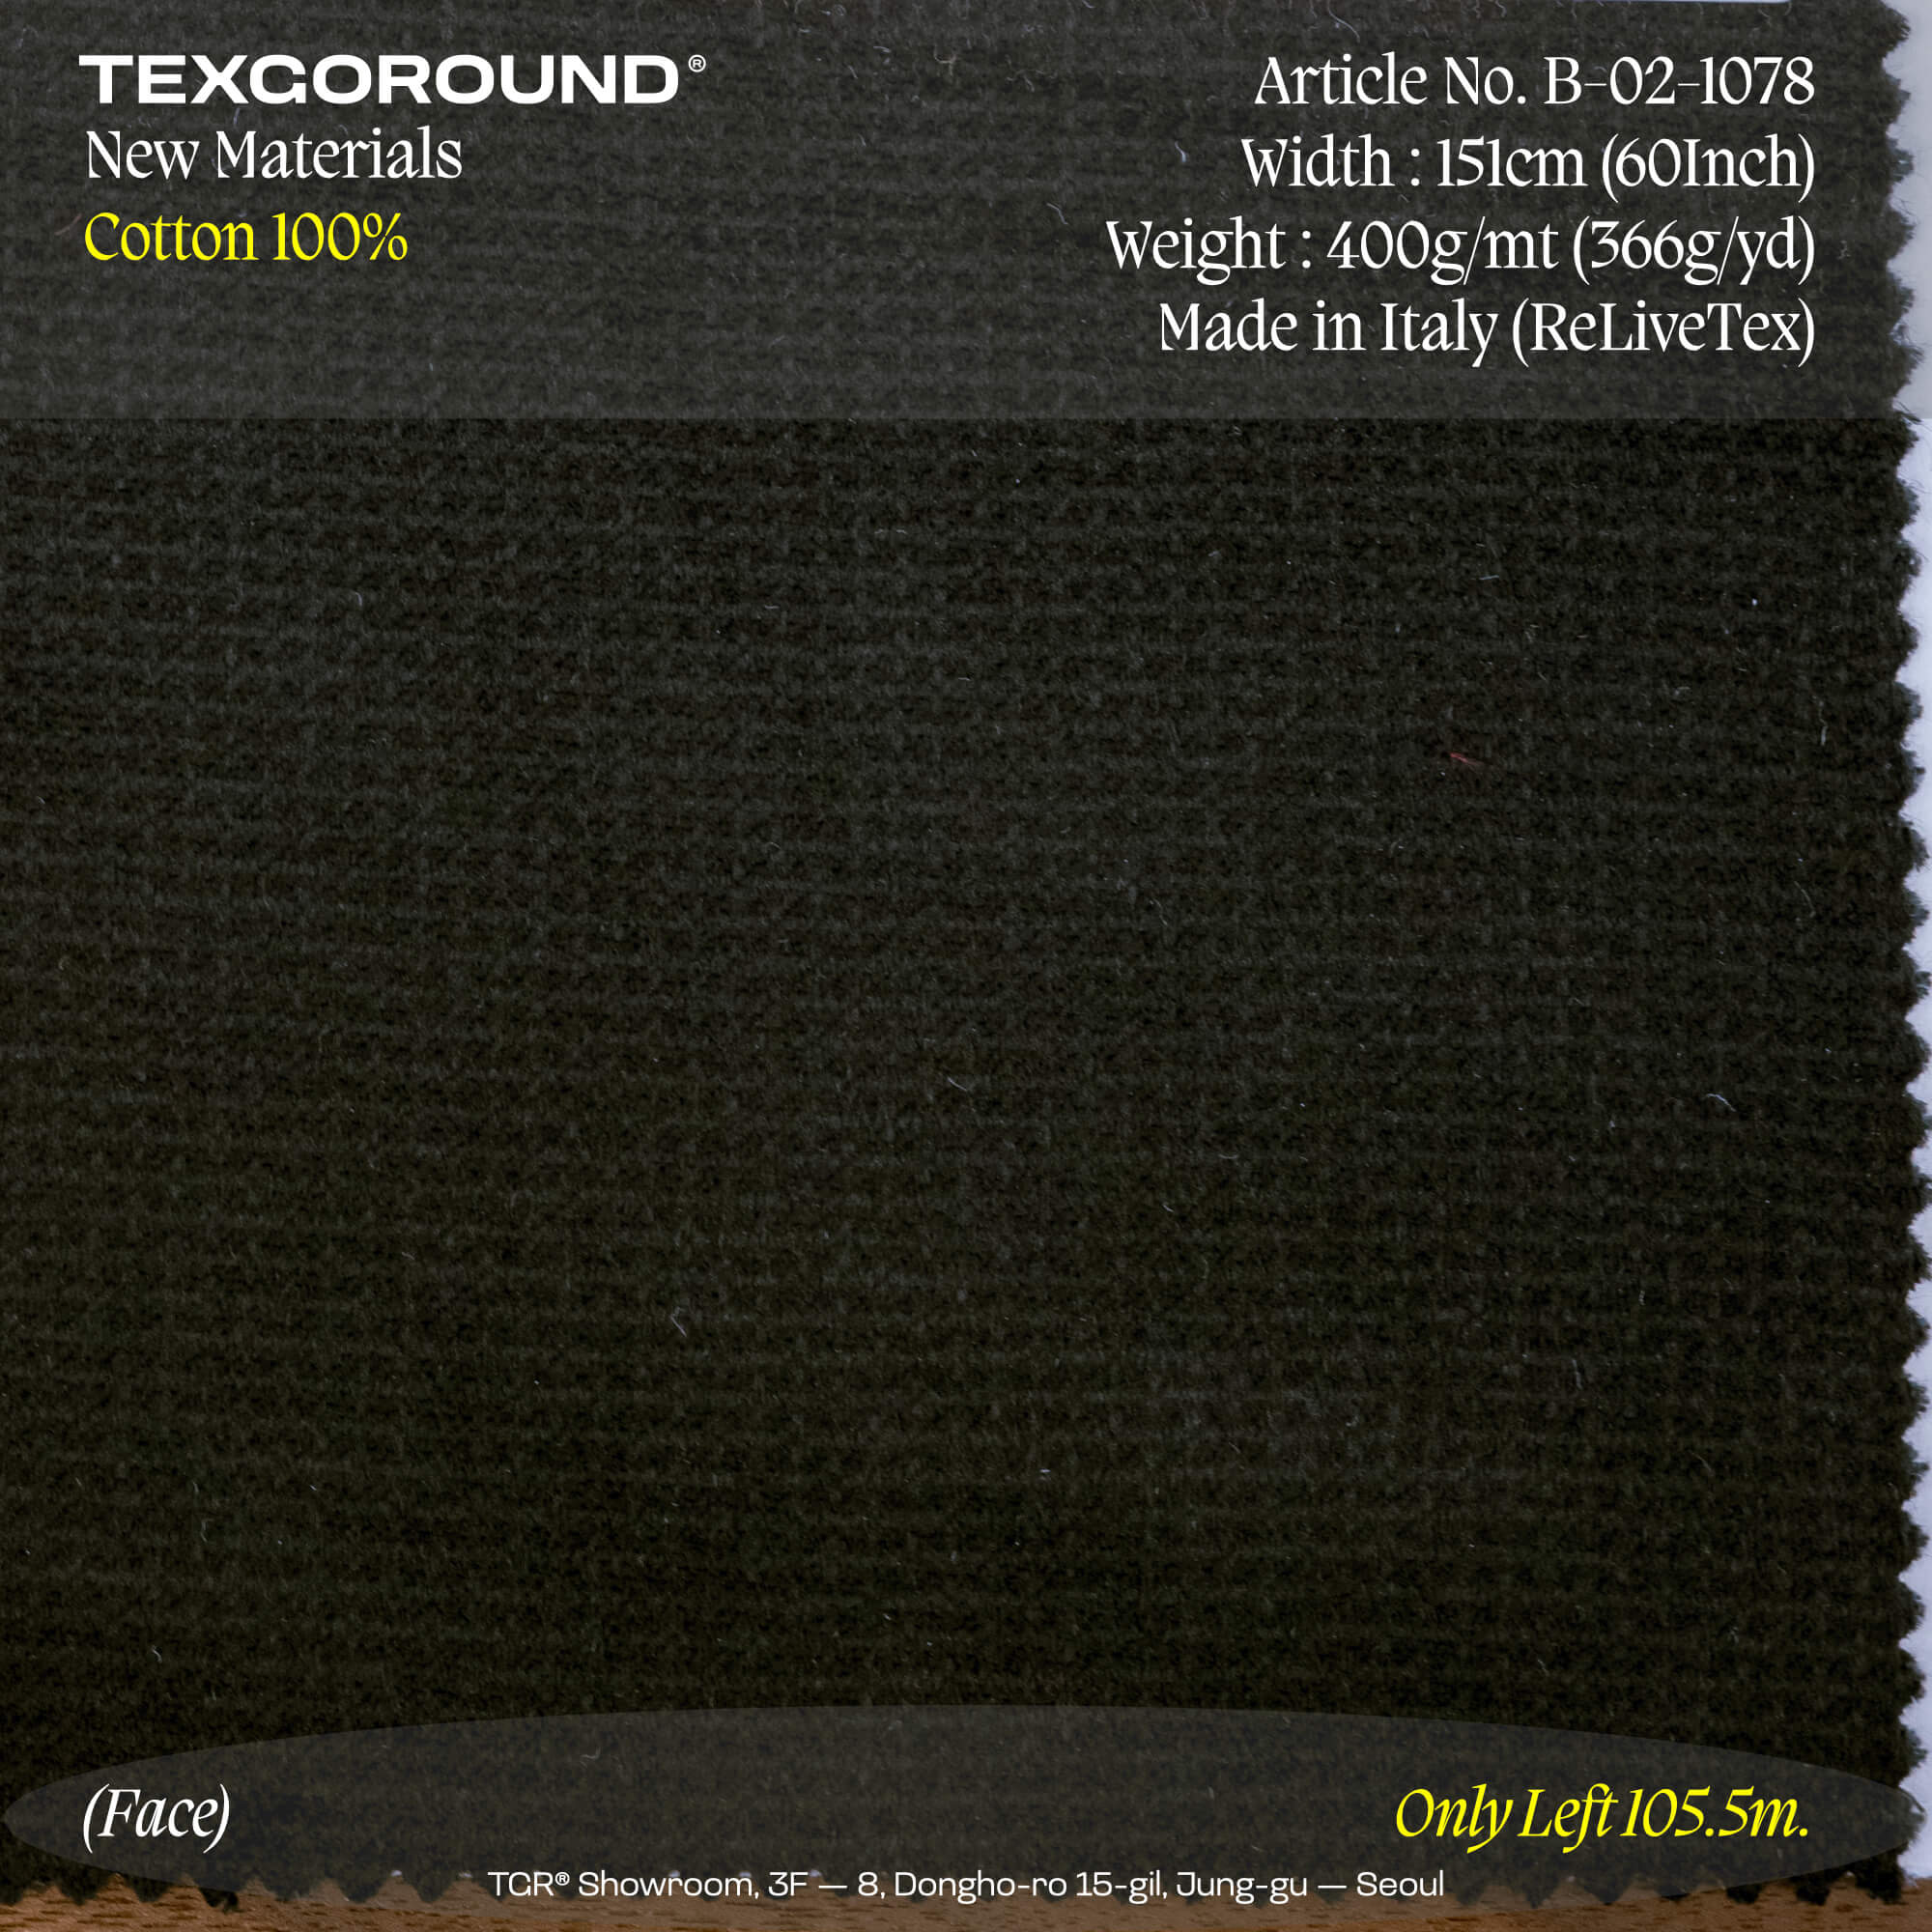 TEXGOROUND® New Materials (6) - Cotton 100%